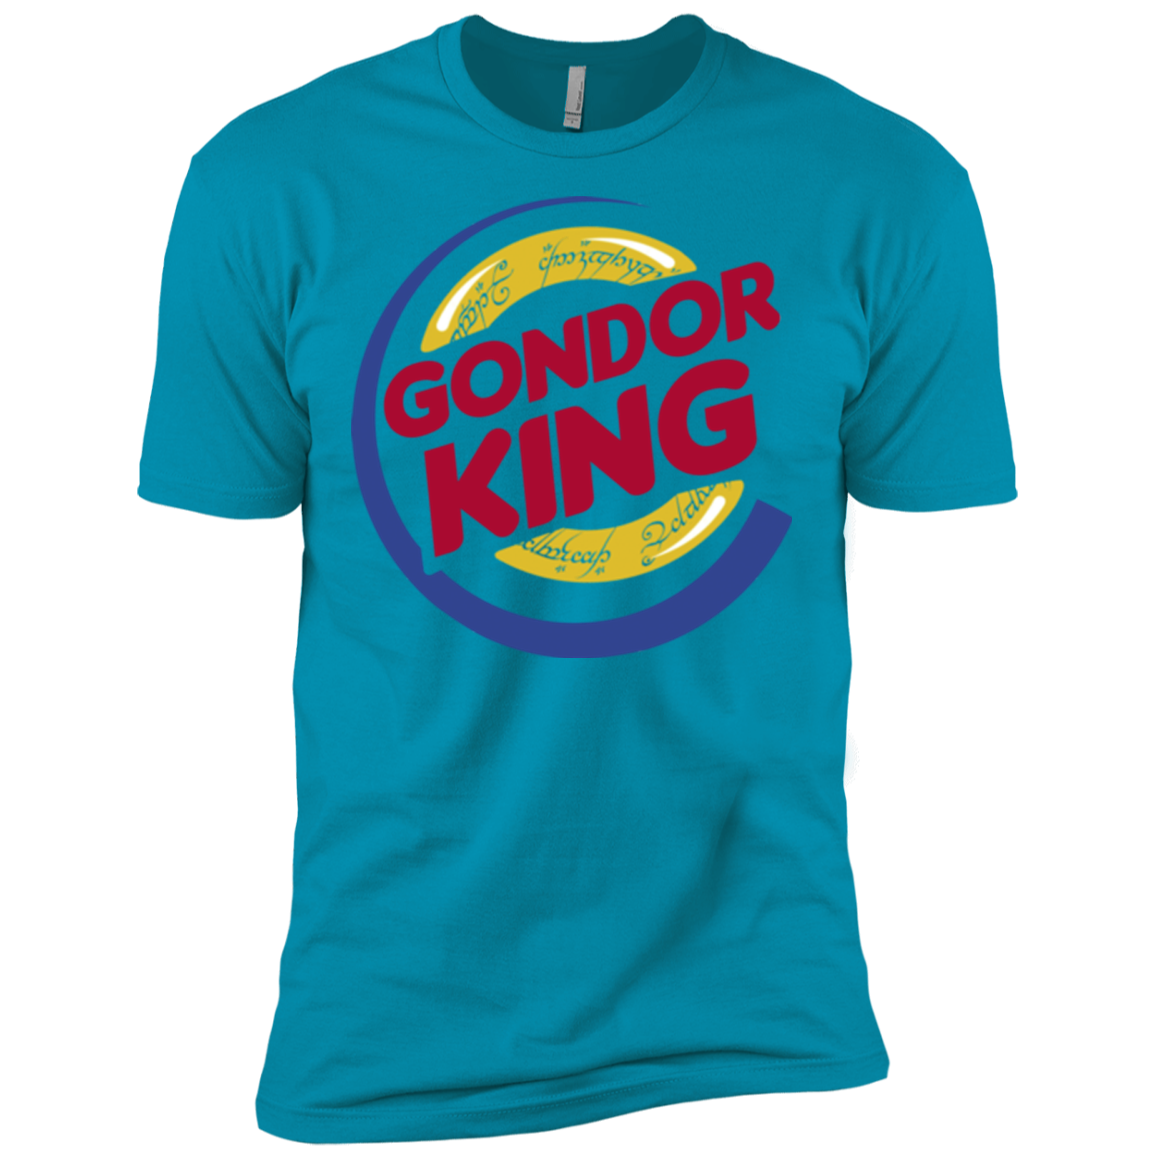 Gondor King Men's Premium T-Shirt